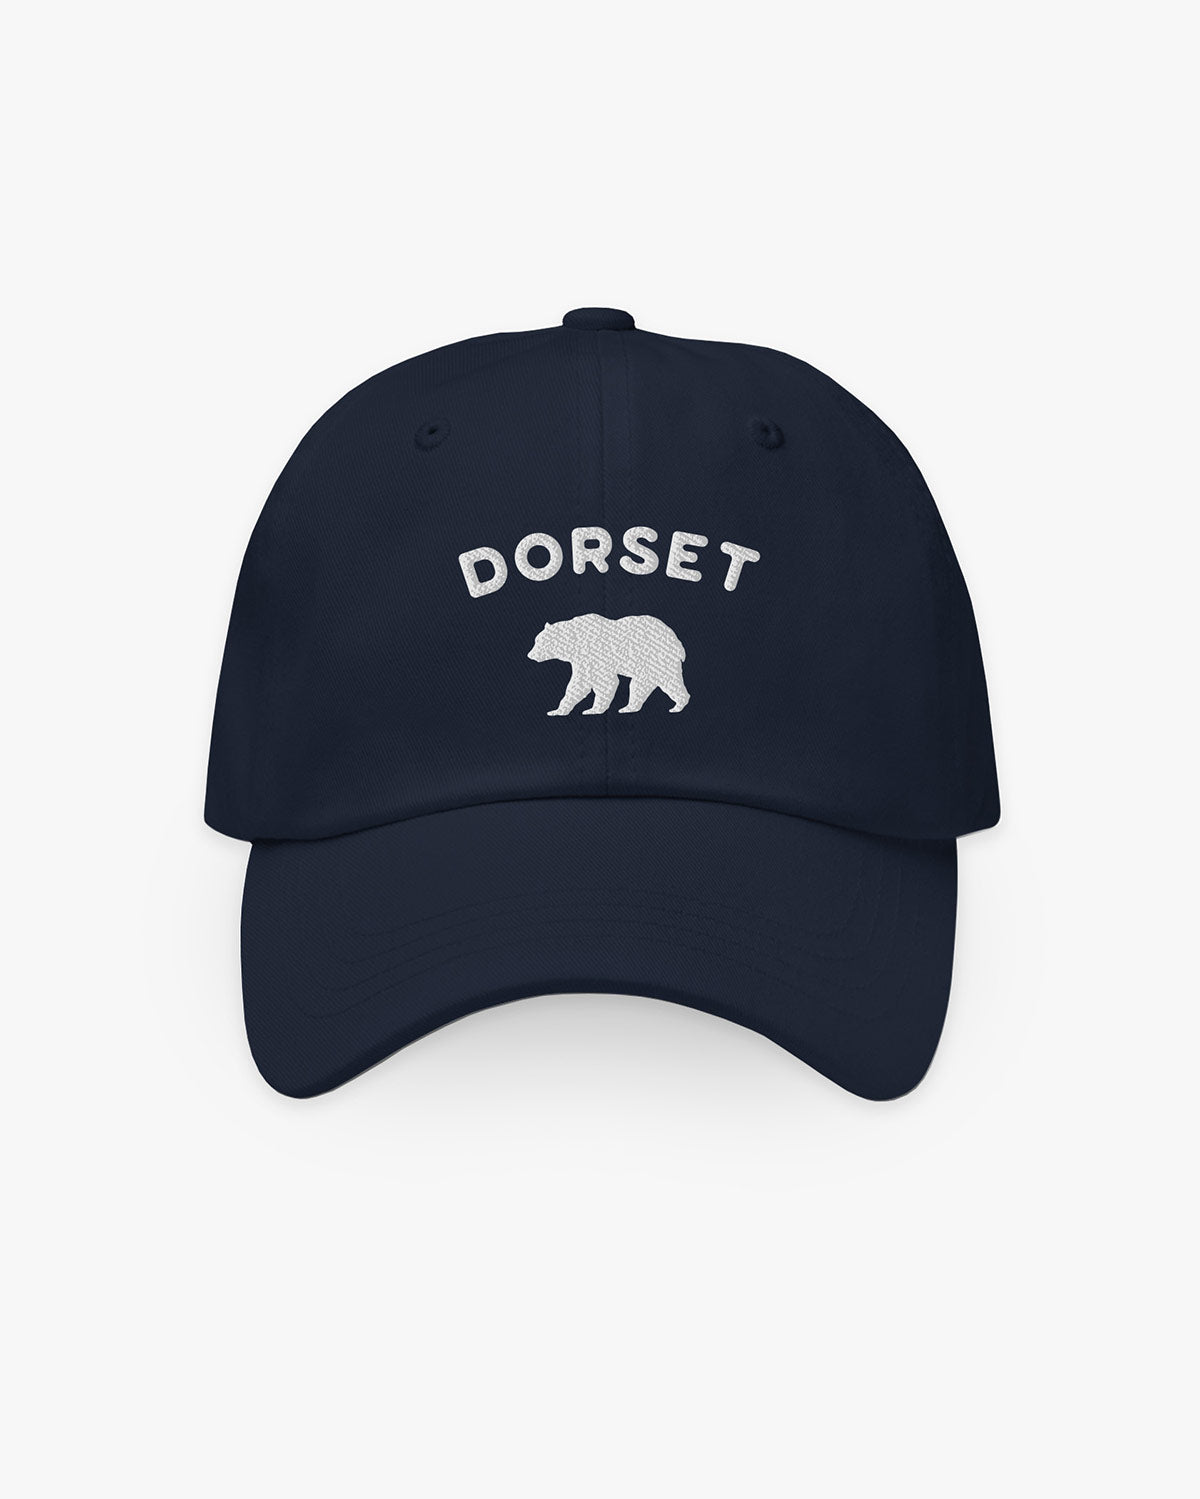 Bear - Dorset - Hat